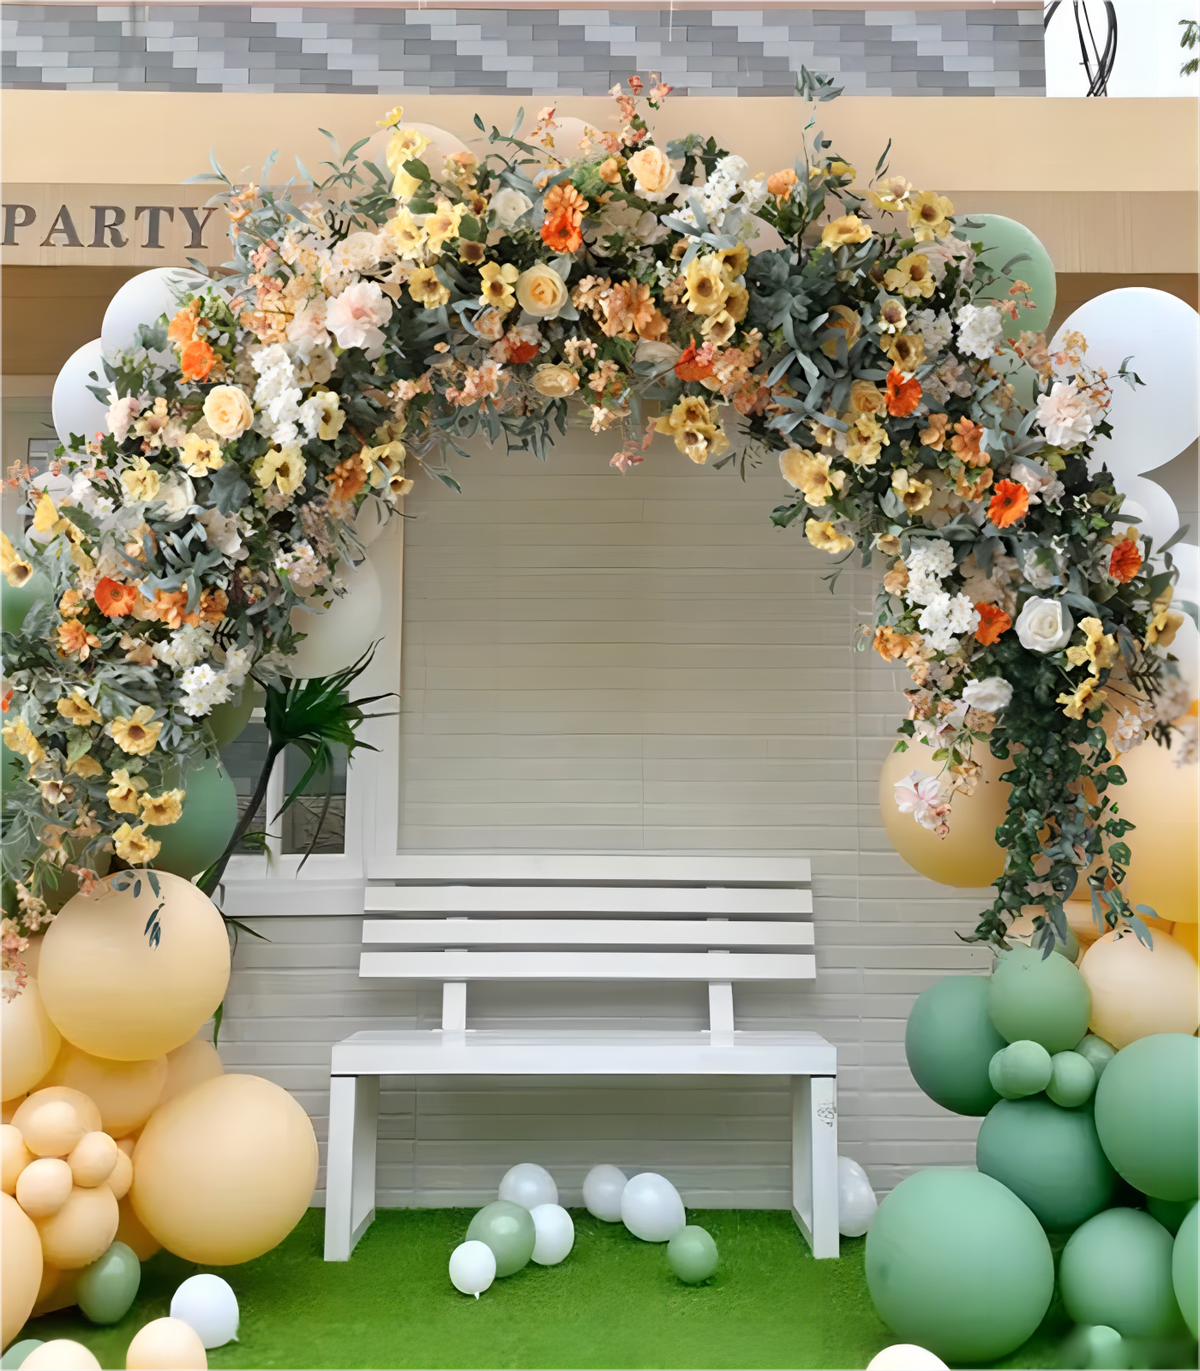 Yellow Artificial Flower Arrangement Row Wedding Party Birthday Backdrop Decor CH5025